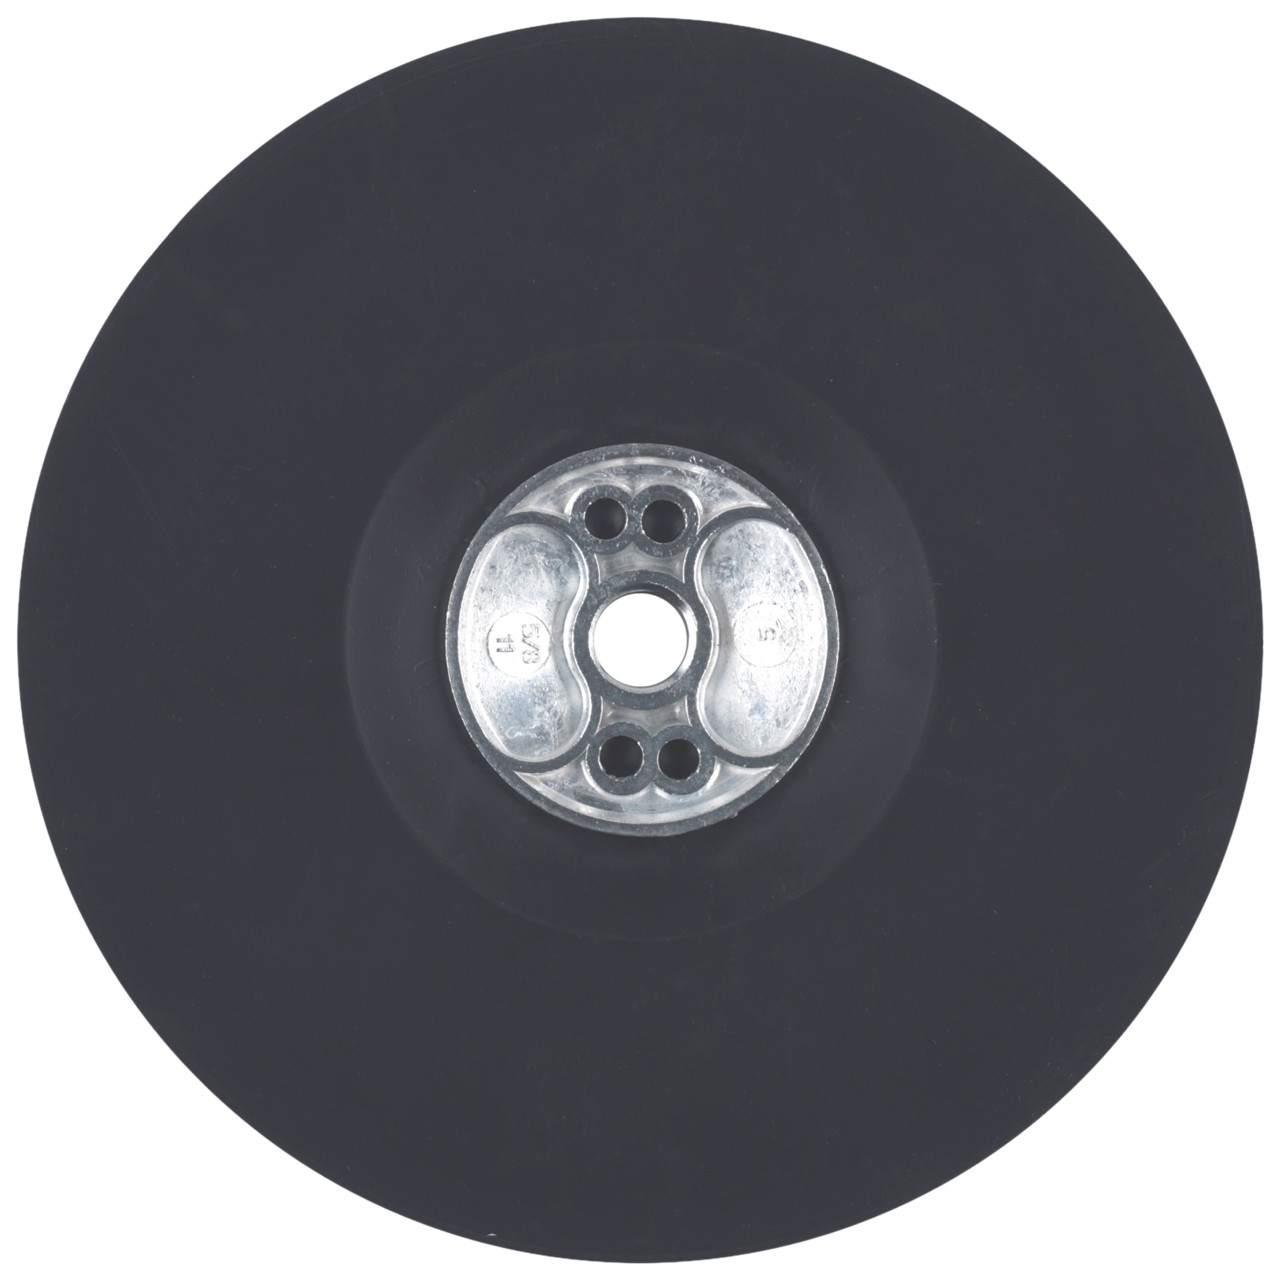 Accessori Tyrolit DxH 125x22 Per disco in fibra, durezza: HARD, forma: PAD, Art. 709997